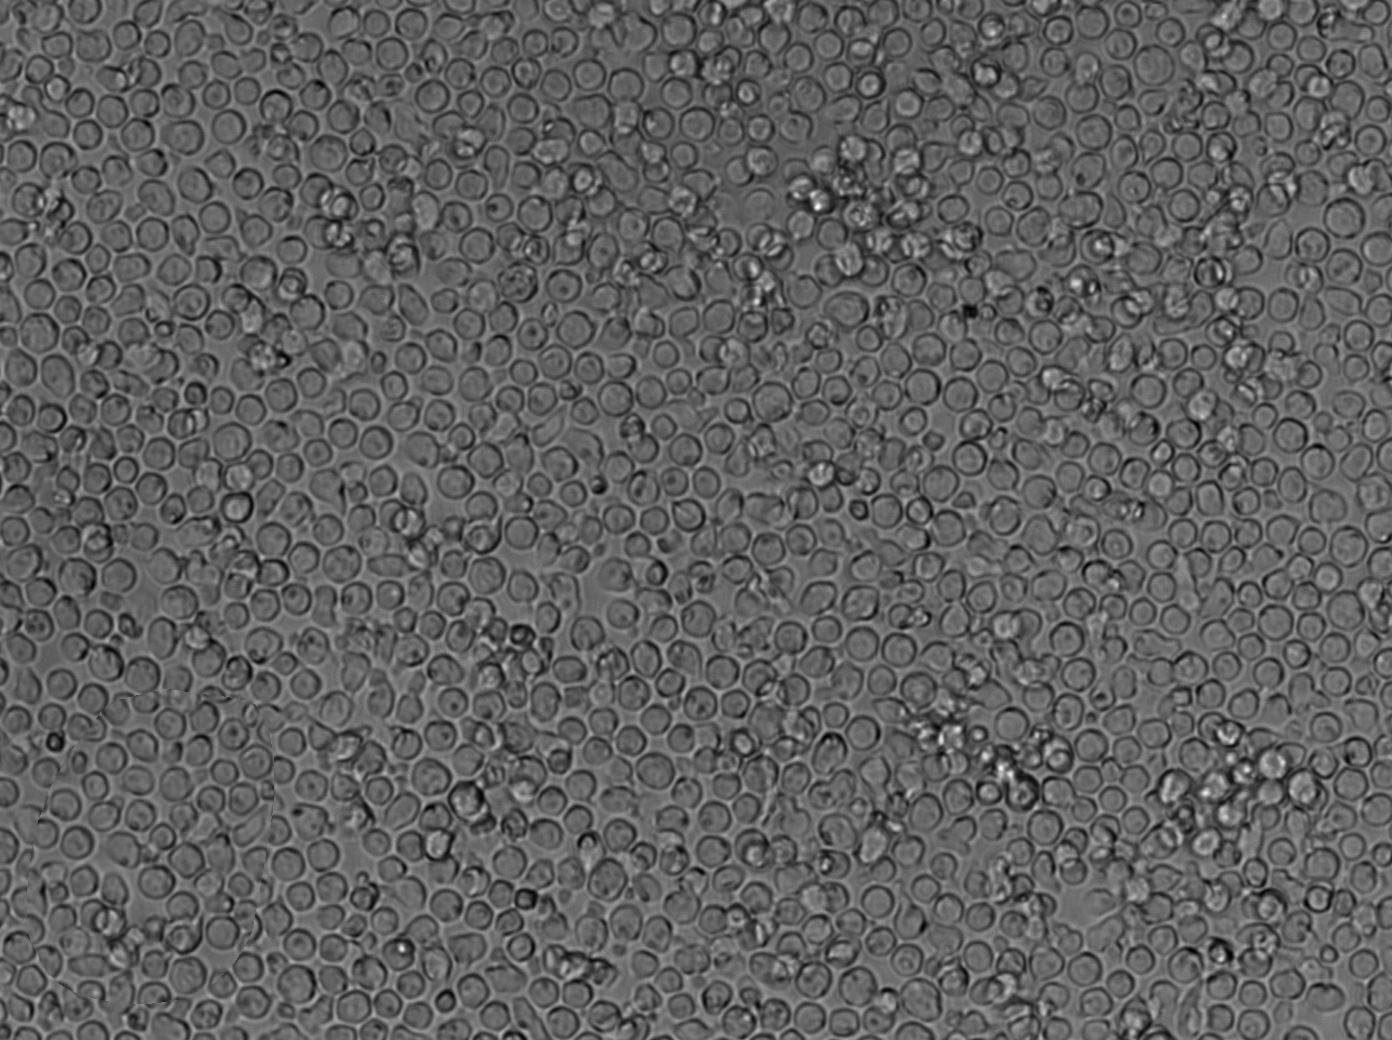 PTM1[微量元素]干燥粉末培养基